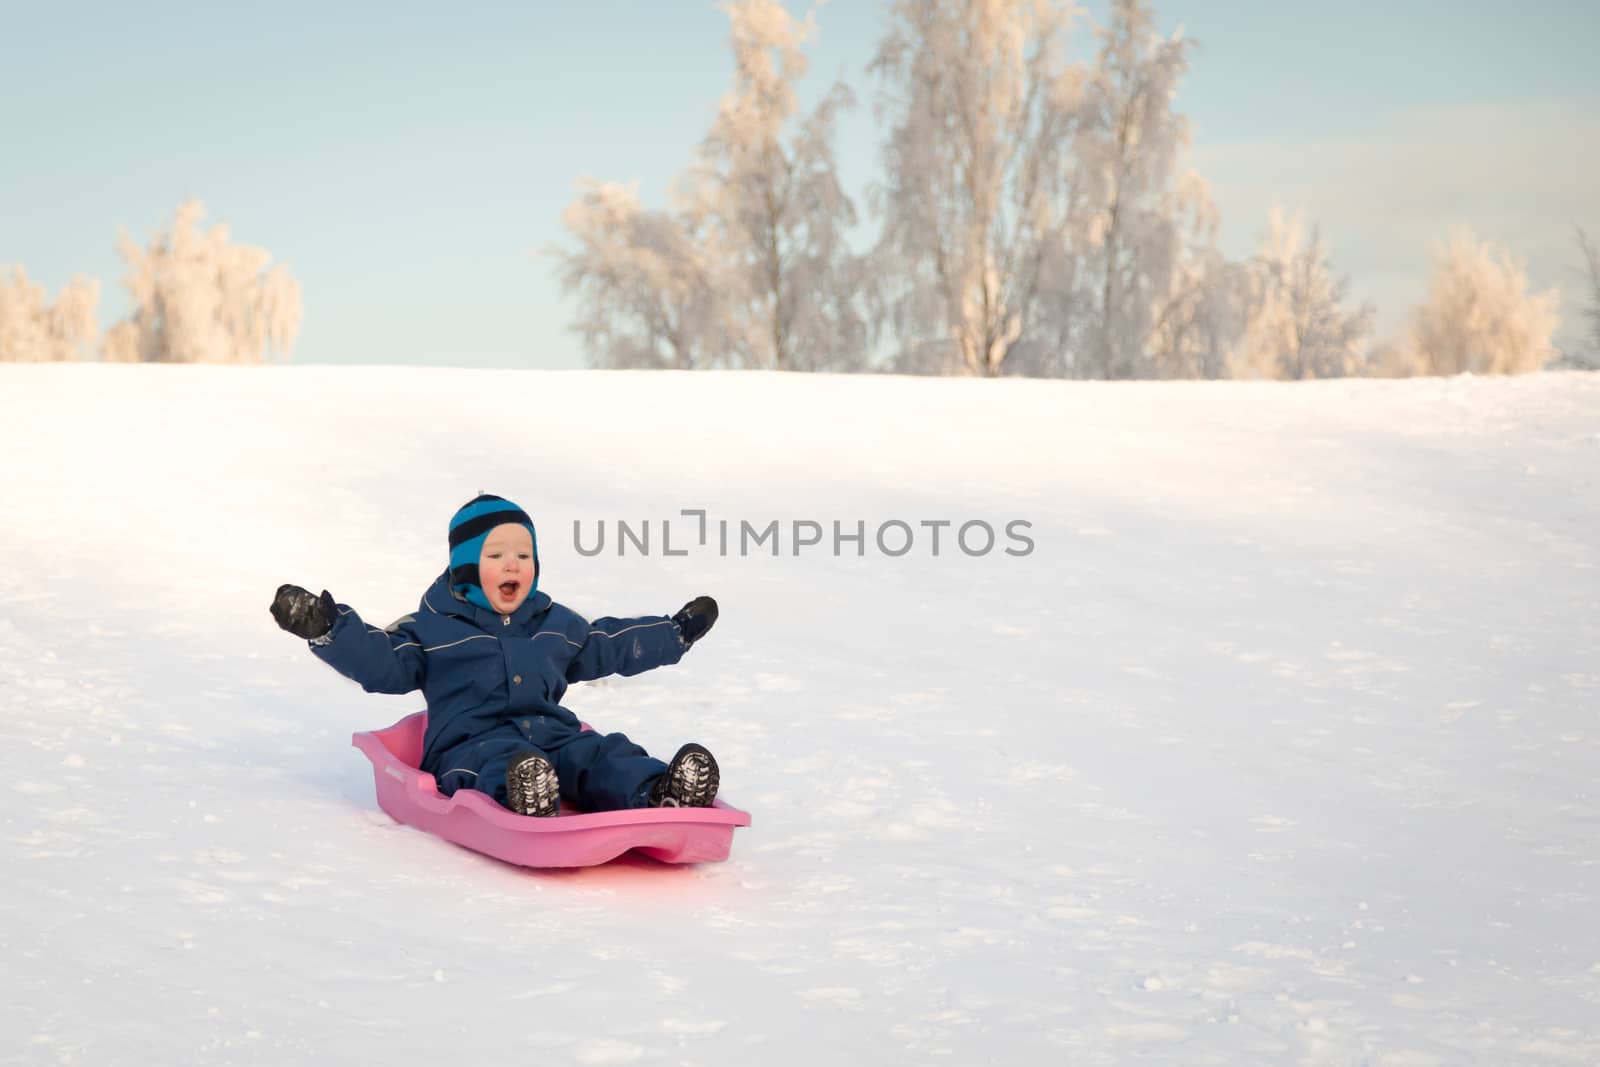 Boy and winter fun by leorantala